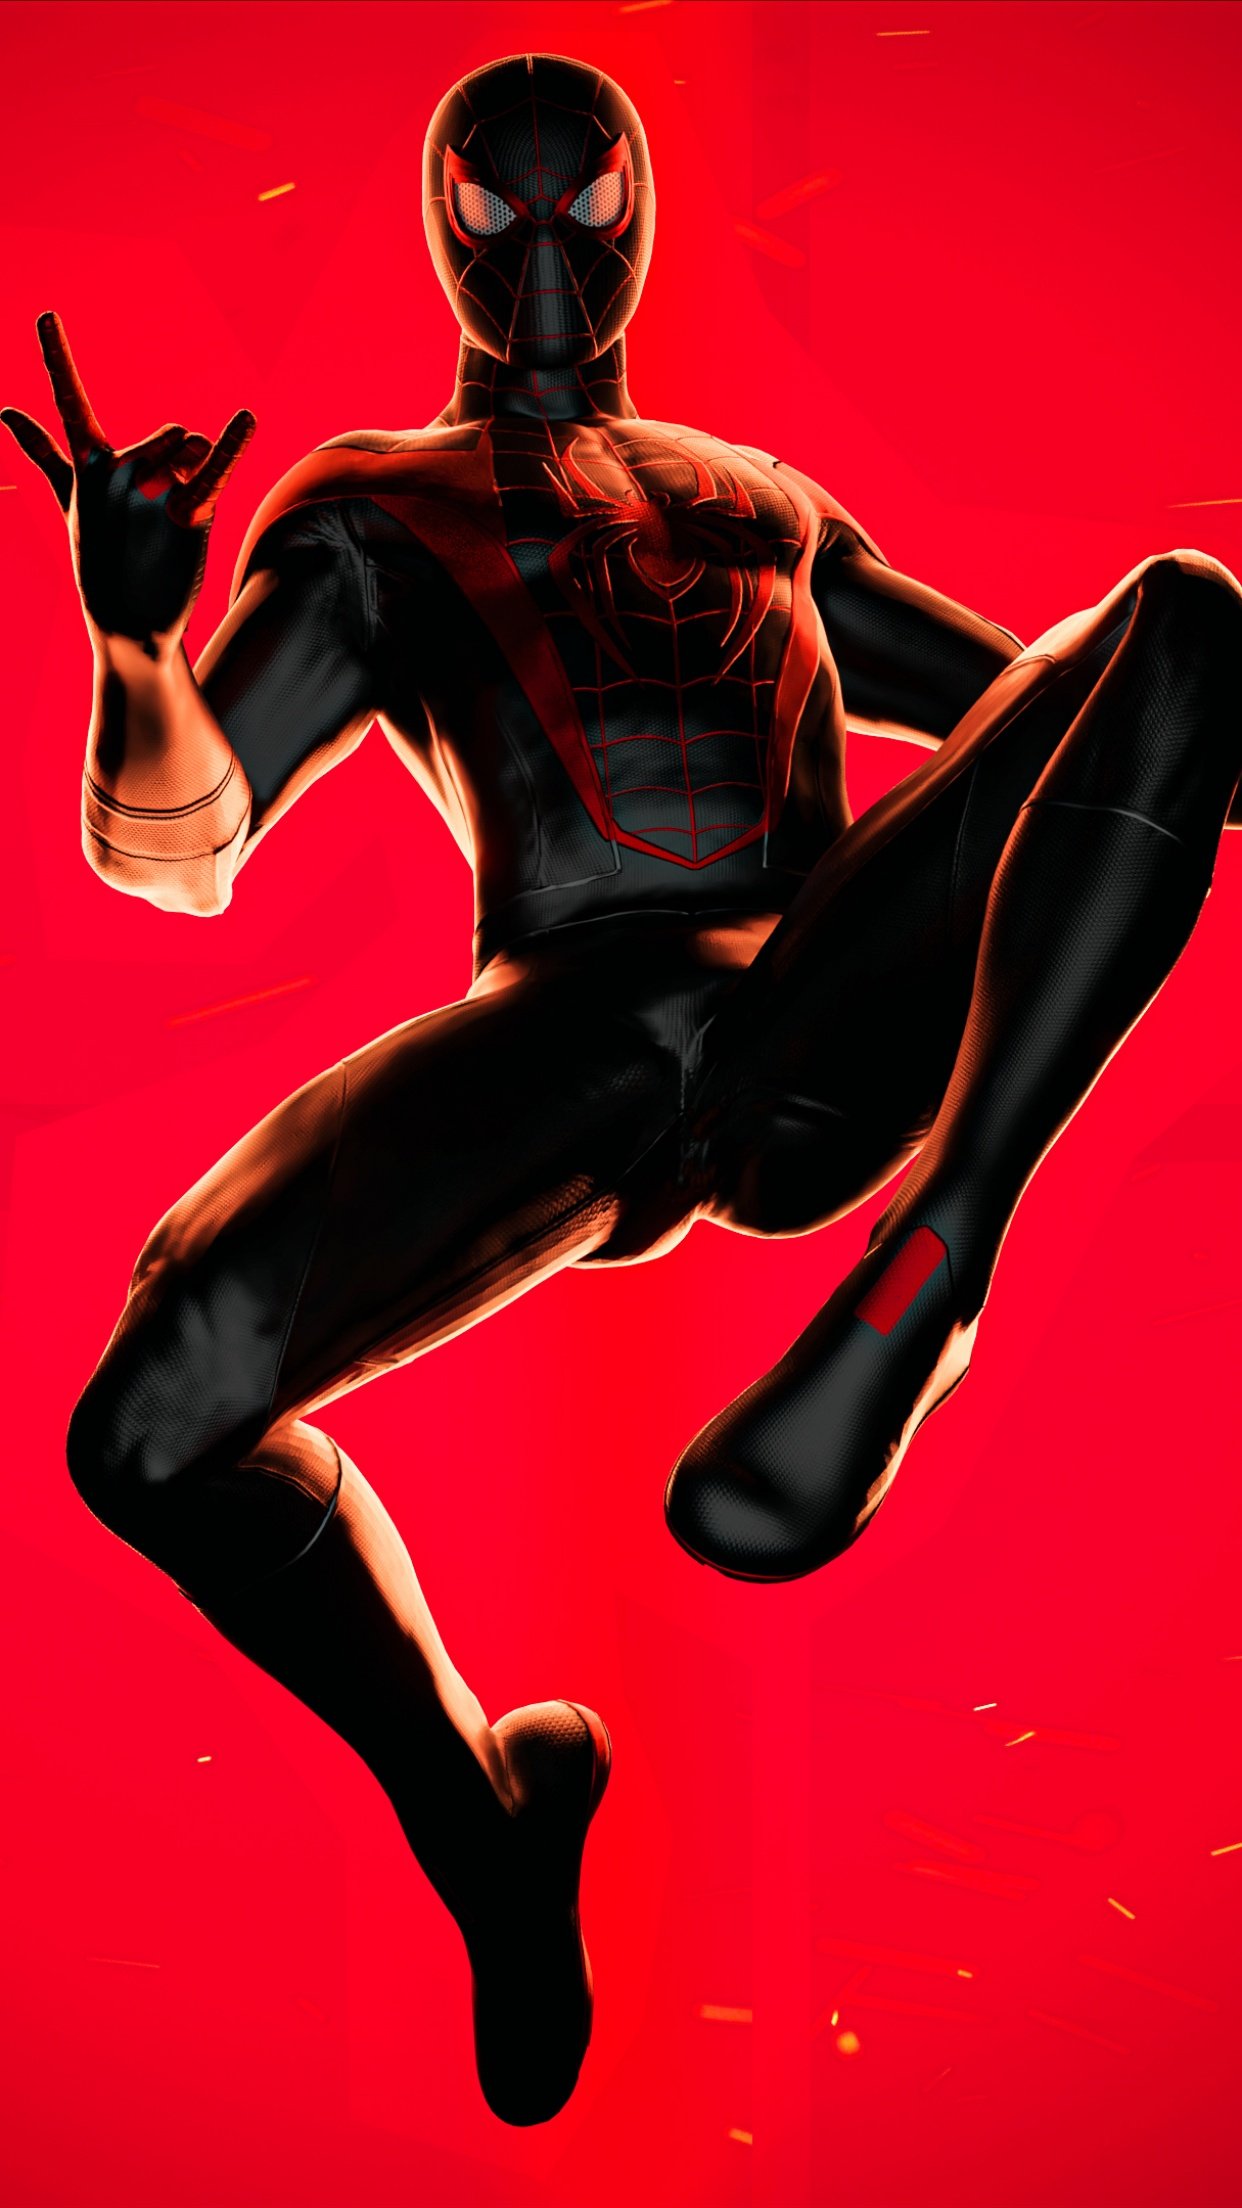 Marvel's Spider Man: Miles Morales Wallpaper 4K, Photo Mode, PlayStation 2020 Games, Games